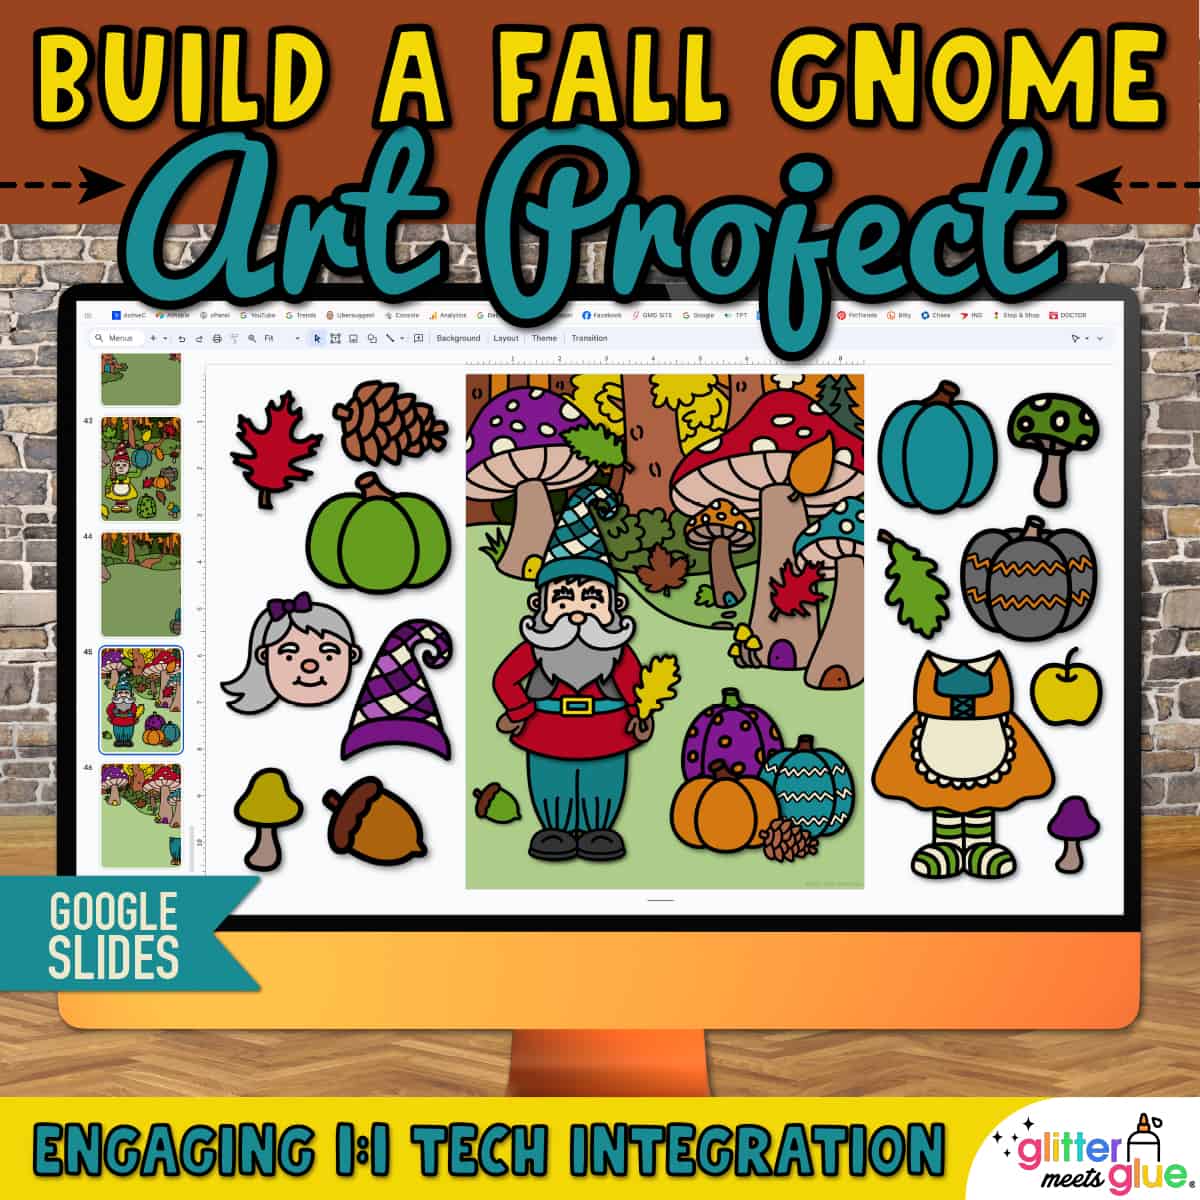 digital fall gnome craft